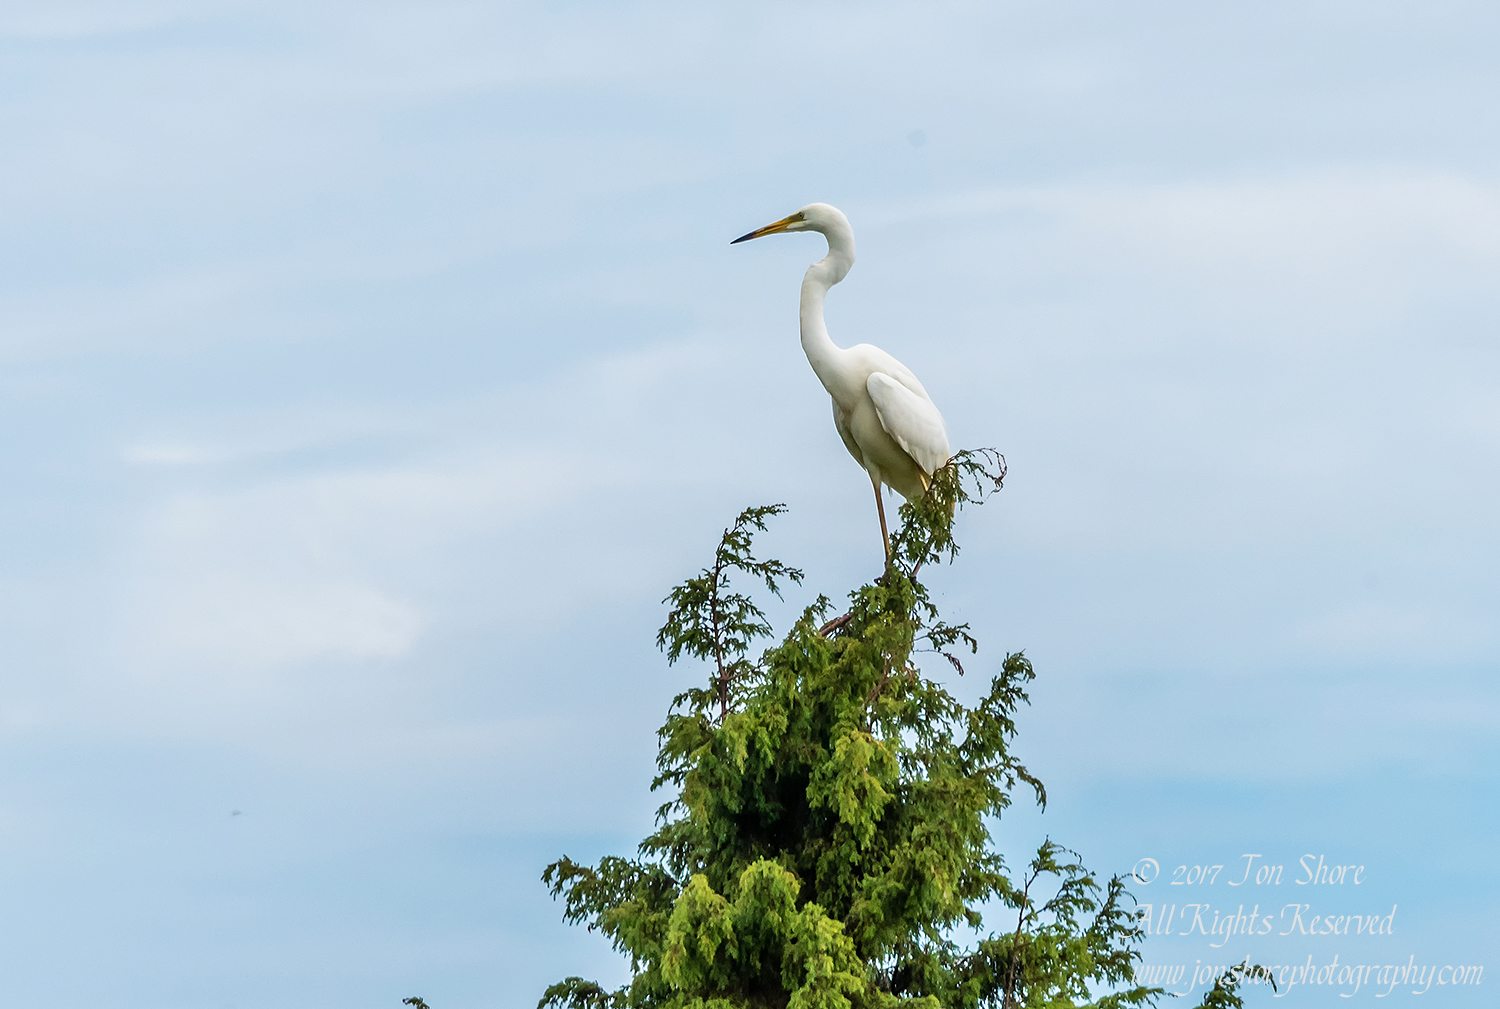 Great White Egret in a Tree, Kemeri National Park, Latvia